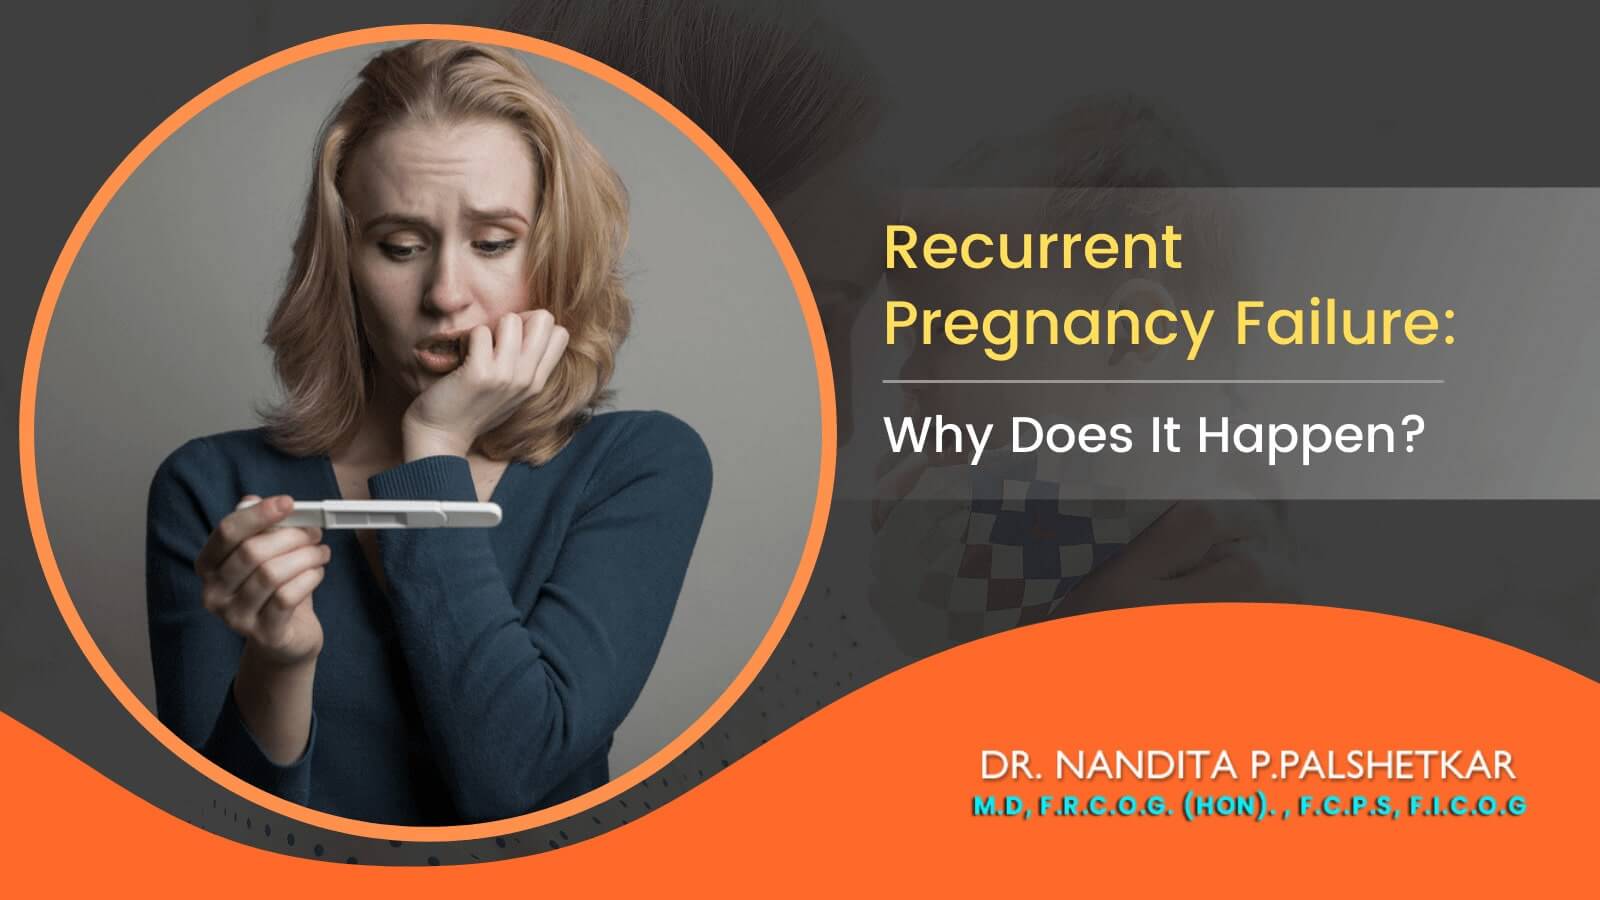 Recurrent Pregnancy Failure: Why Does It Happen?